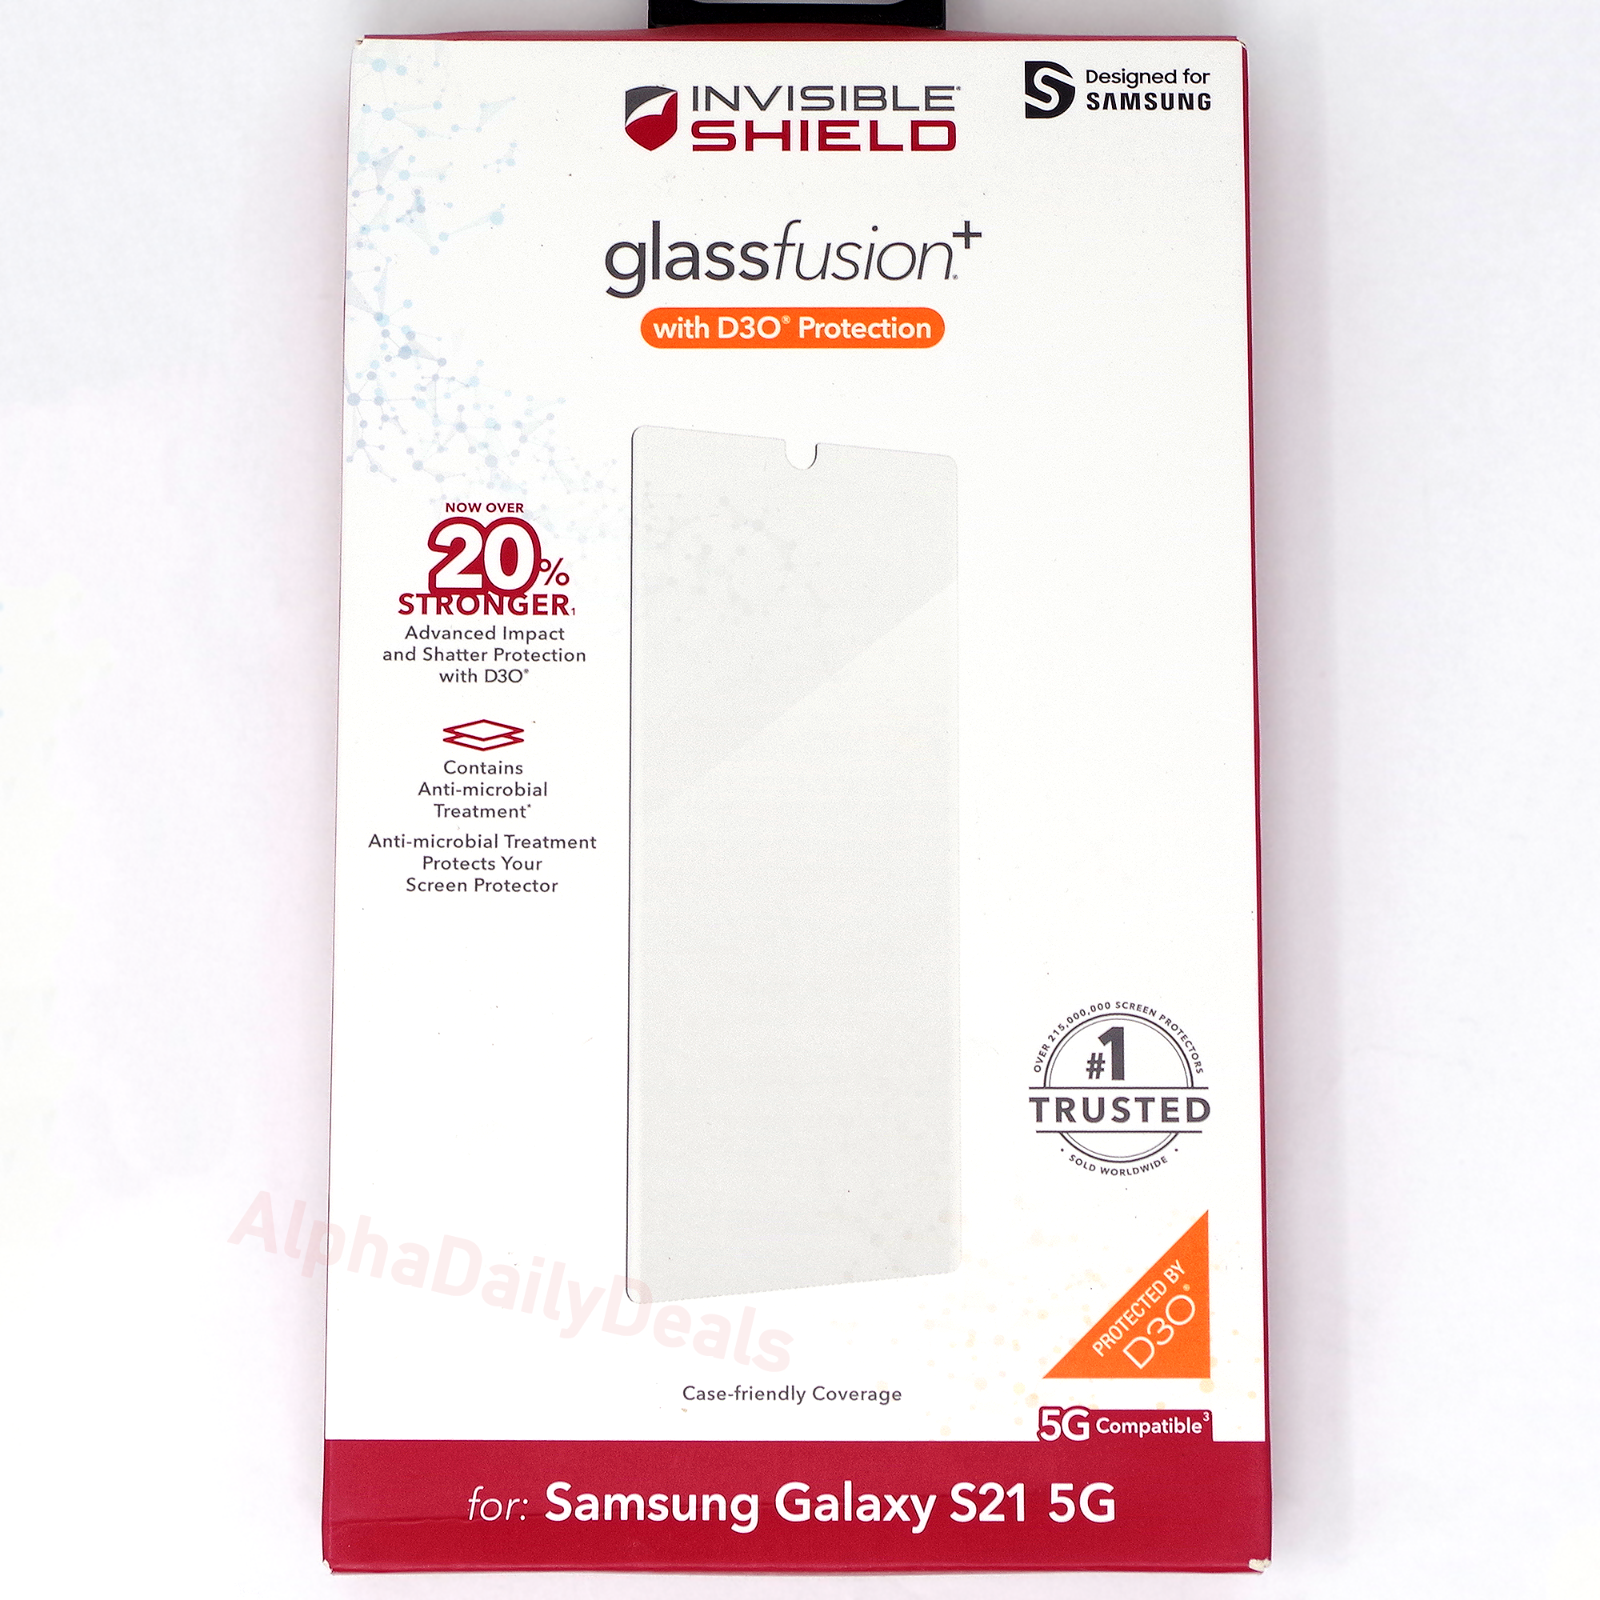 ZAGG InvisibleShield Glass Fusion+ D3O Screen Protector Samsung Galaxy S21 5G